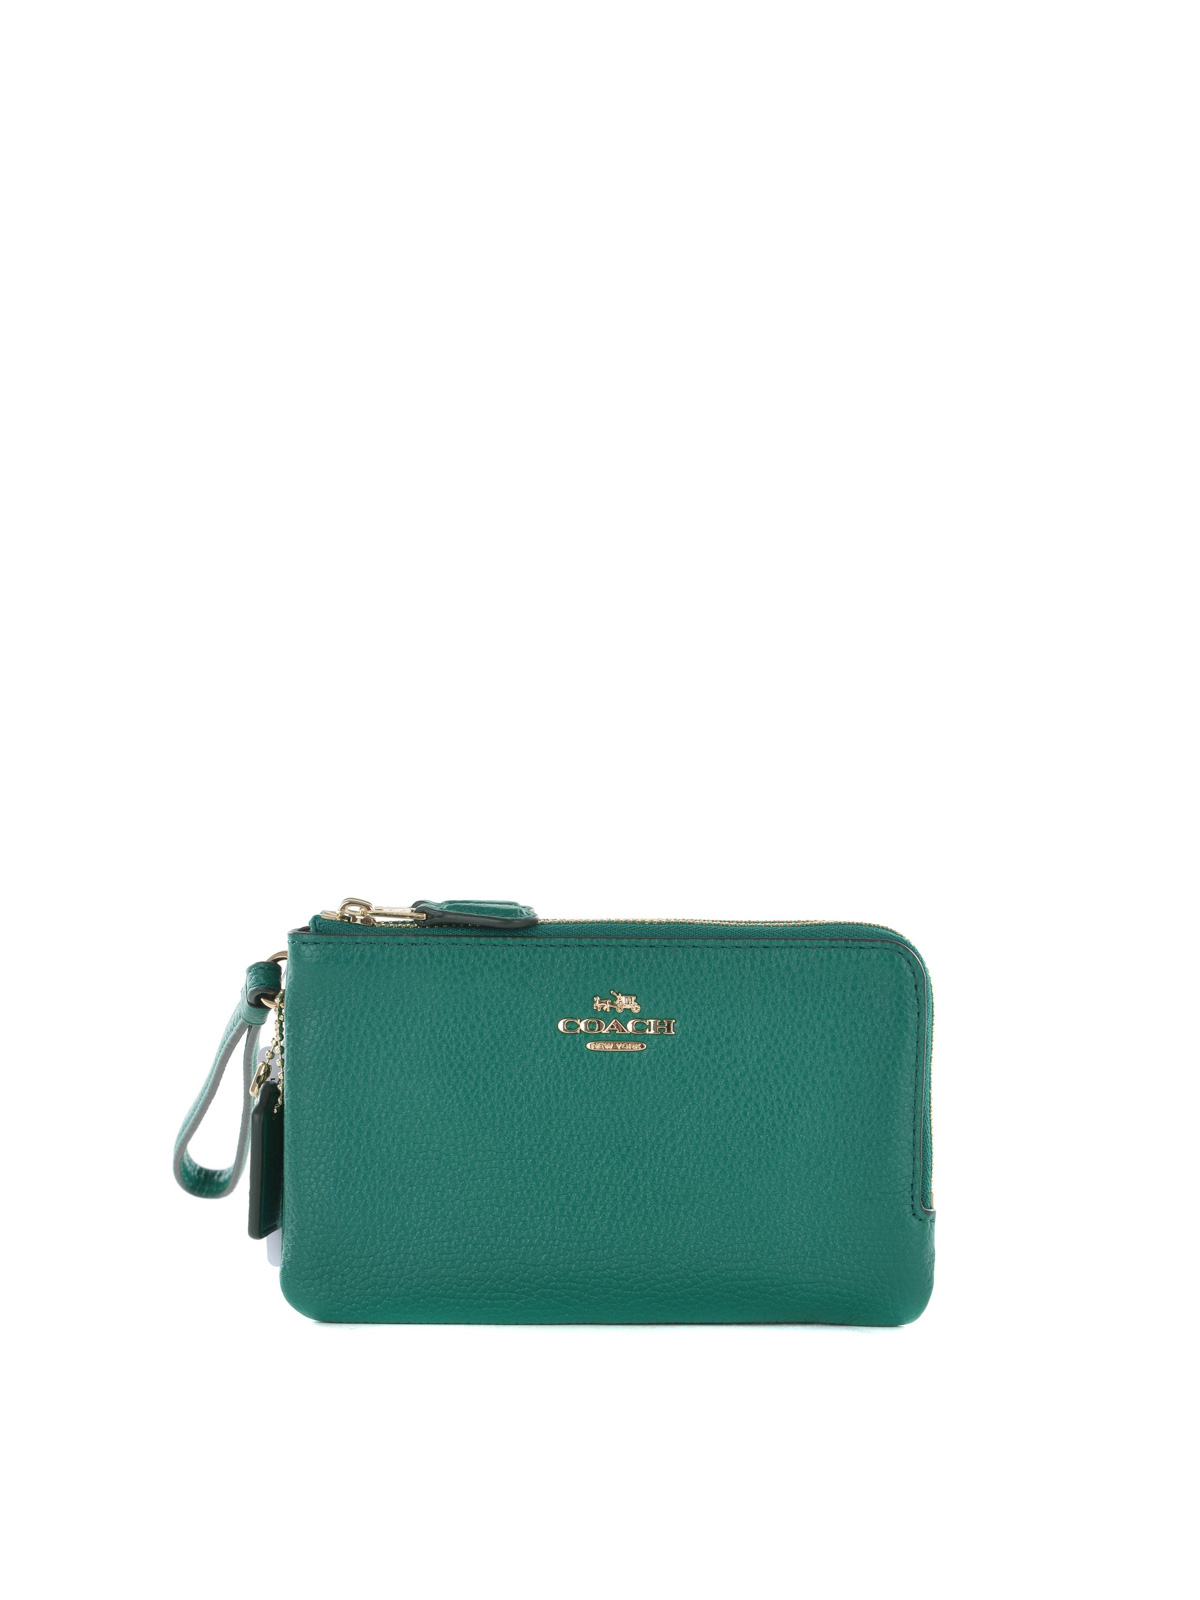 Wallets & purses Coach - Double zip wristlet wallet - 54813LIFOREST